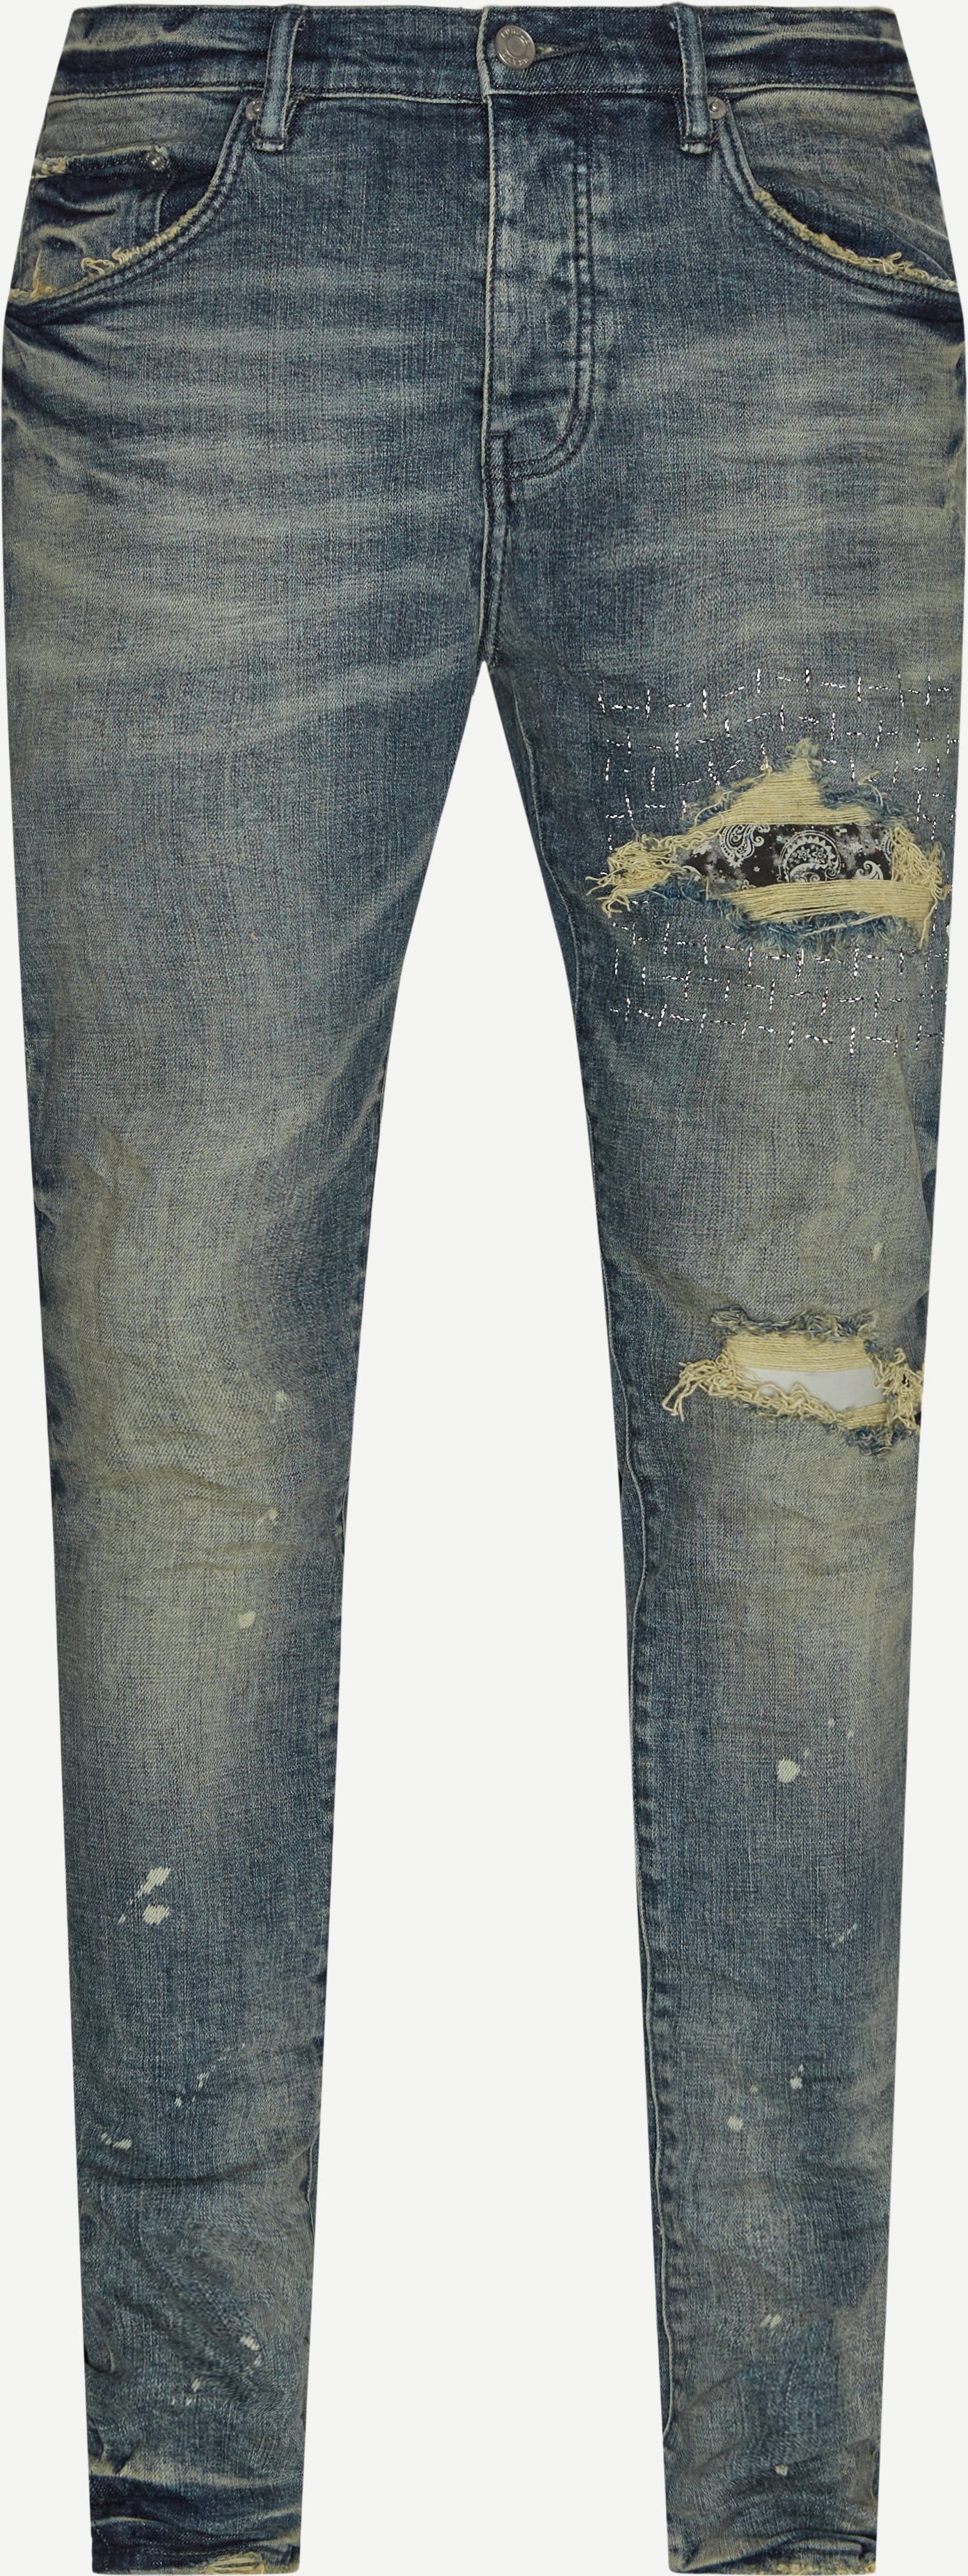 Neue bedruckte Bandana-Patch-Jeans - Jeans - Slim fit - Jeans-Blau